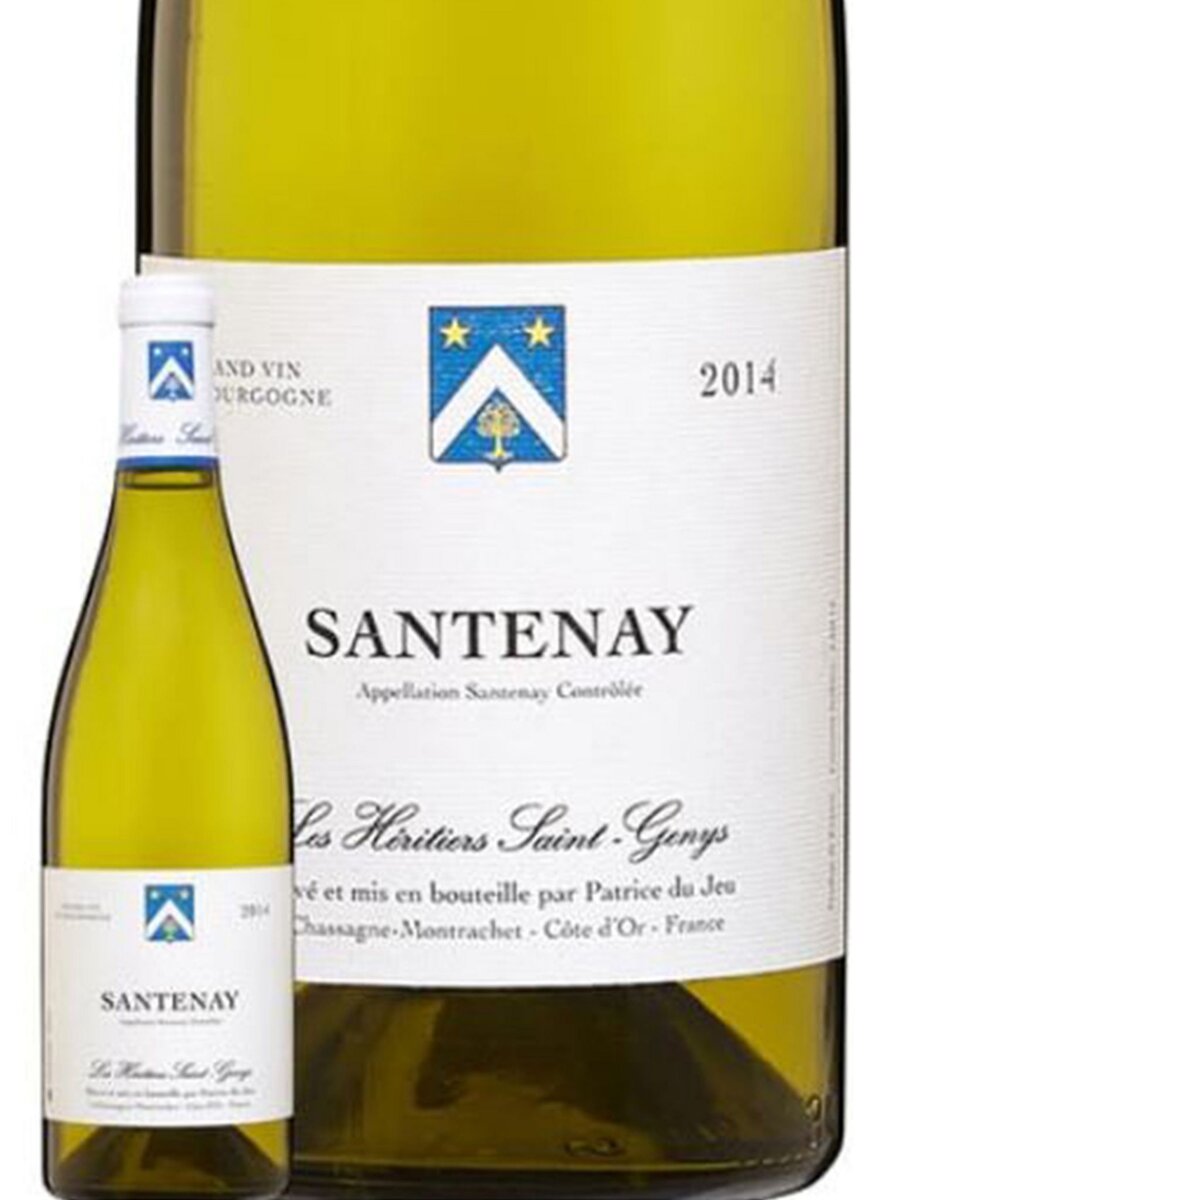 Heritiers Saint Genys Santenay Blanc 2014